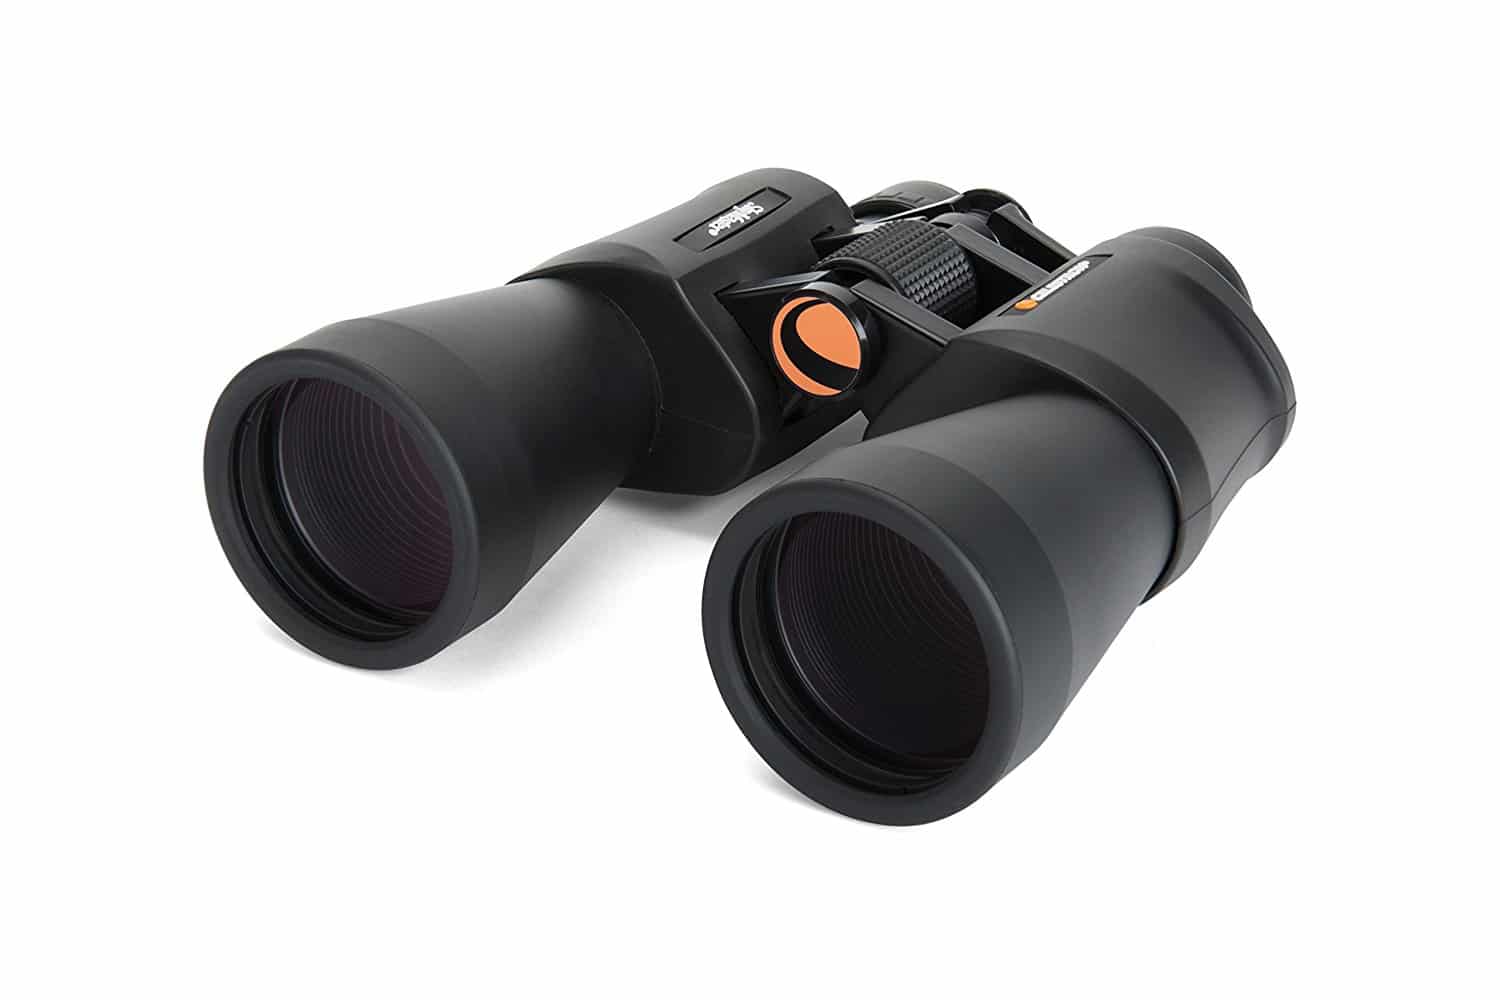 celestron skymaster 8x56 review: best long range binoculars